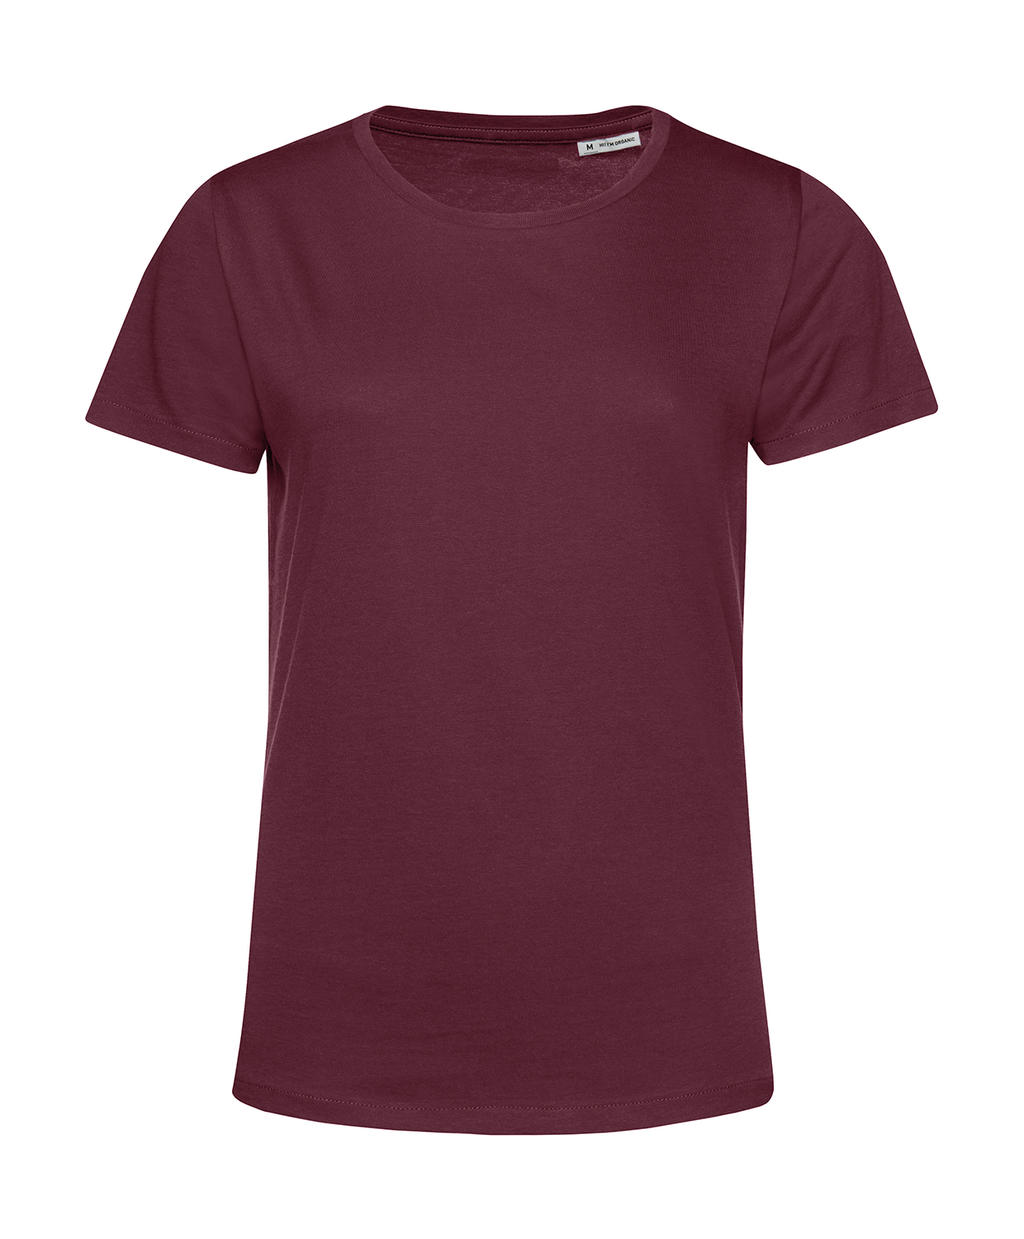 Tričko dámské BC Organic Inspire E150 - tmavě červené, M